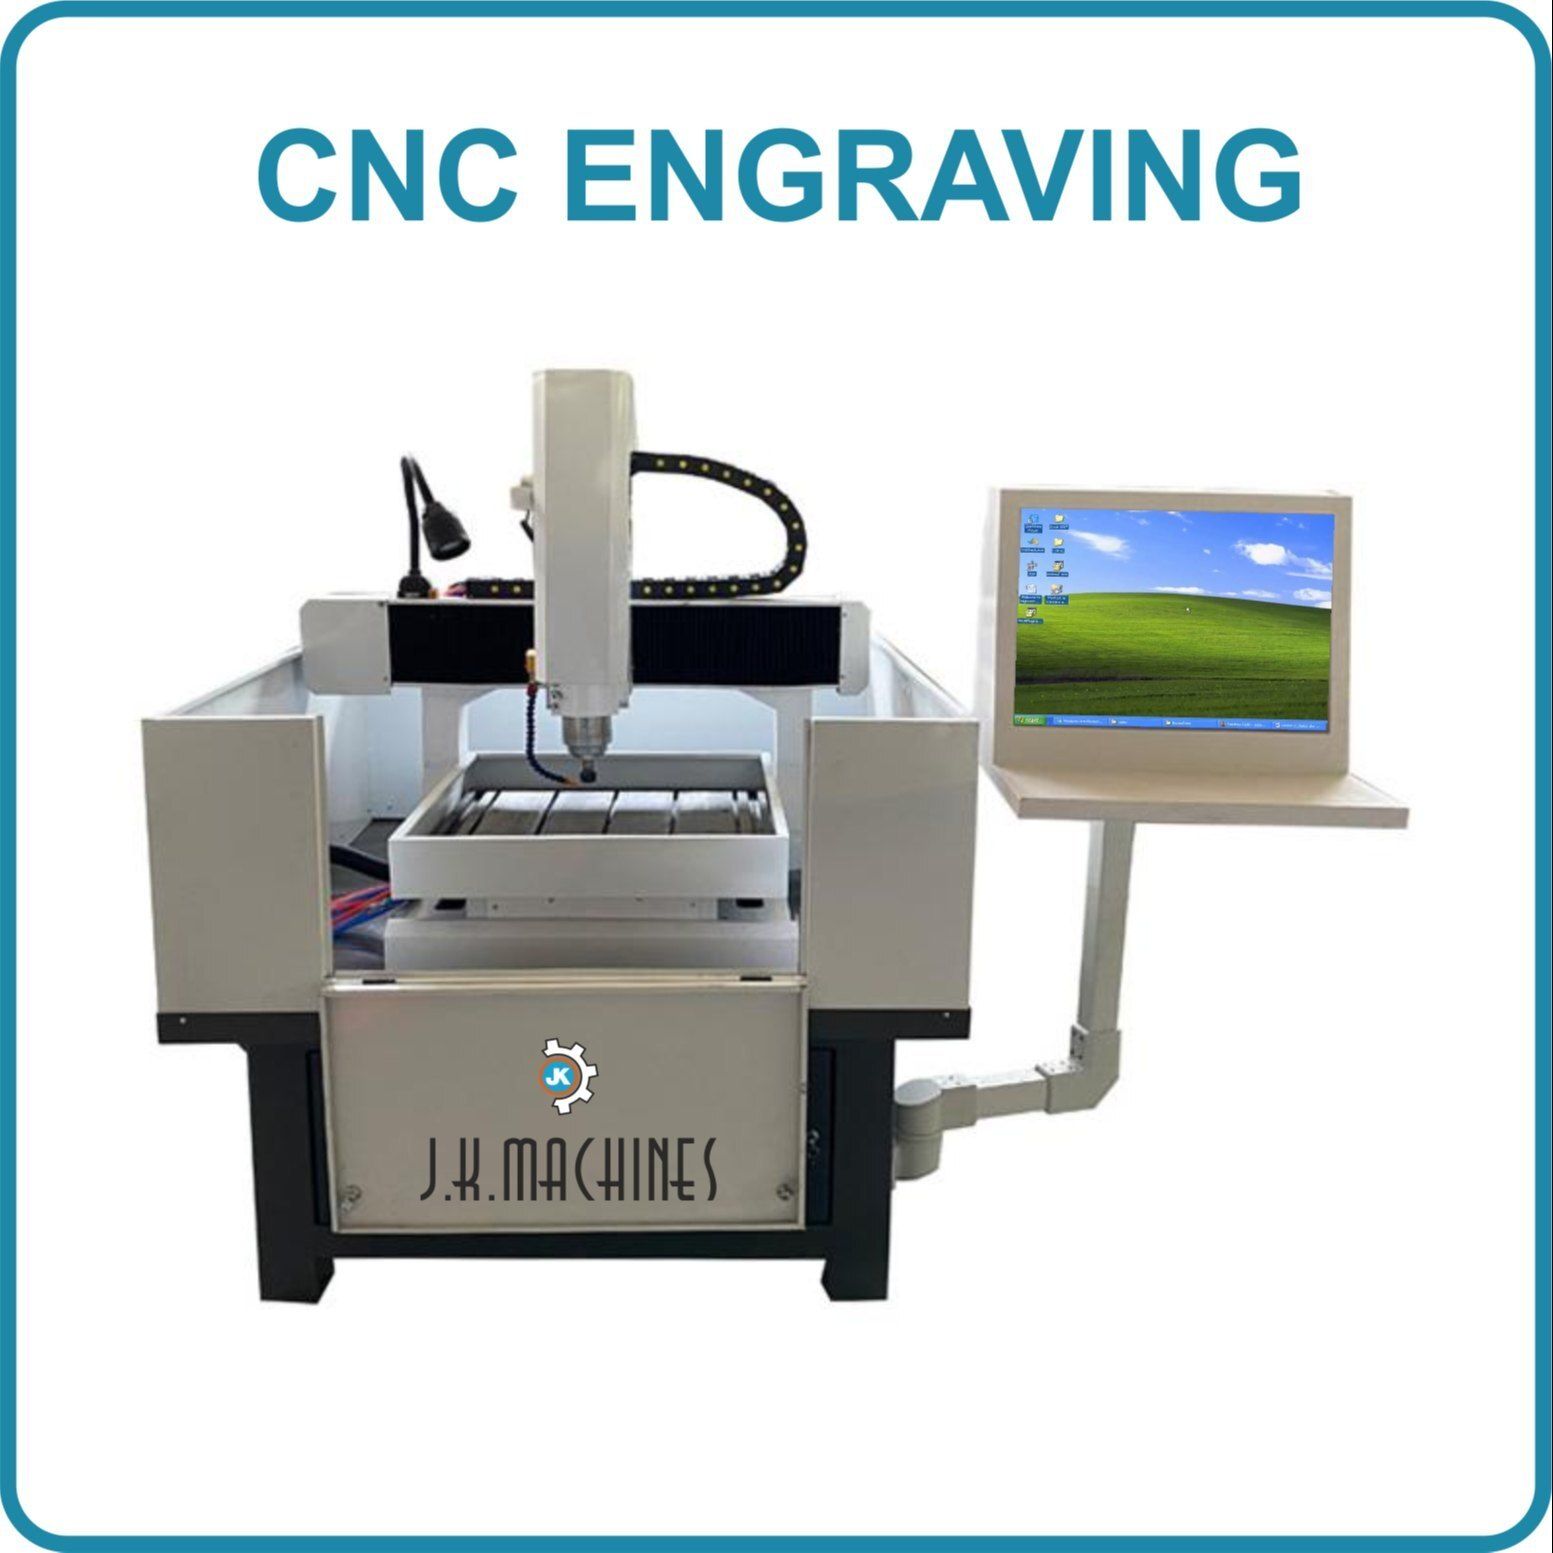 Cnc Engraving Machines